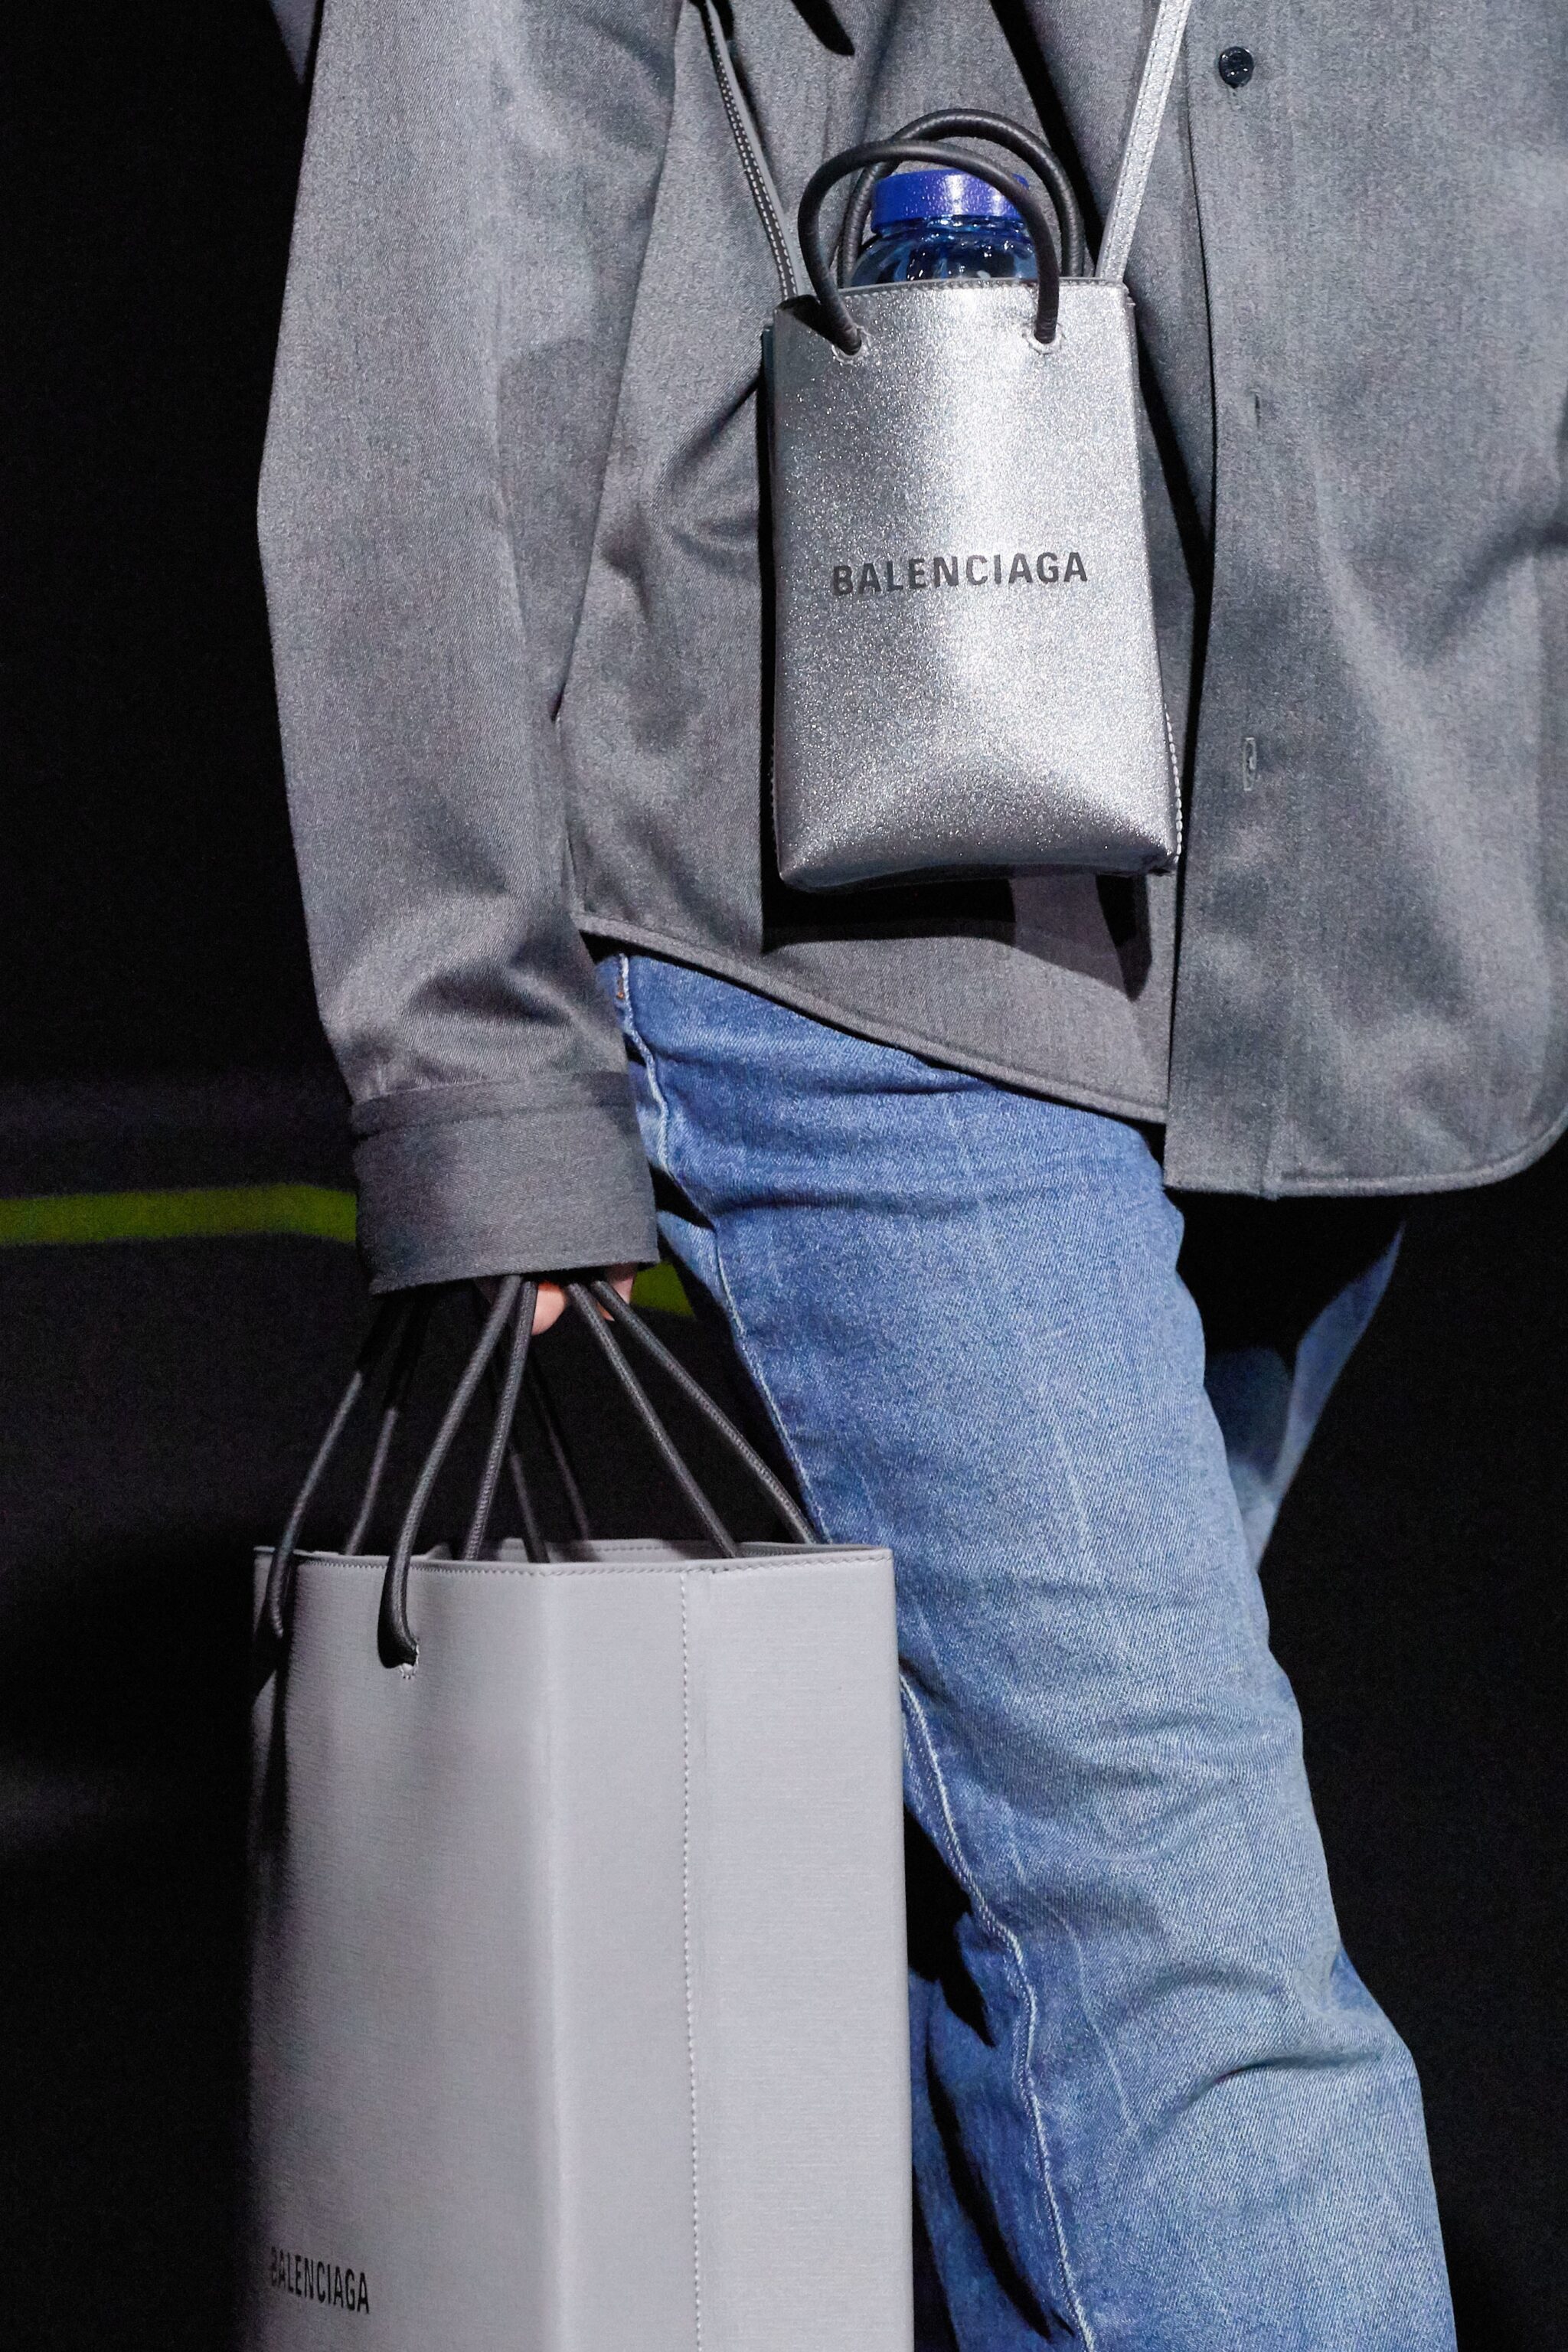 Balenciaga Fall/Winter 2019 Runway Bag Collection - Spotted